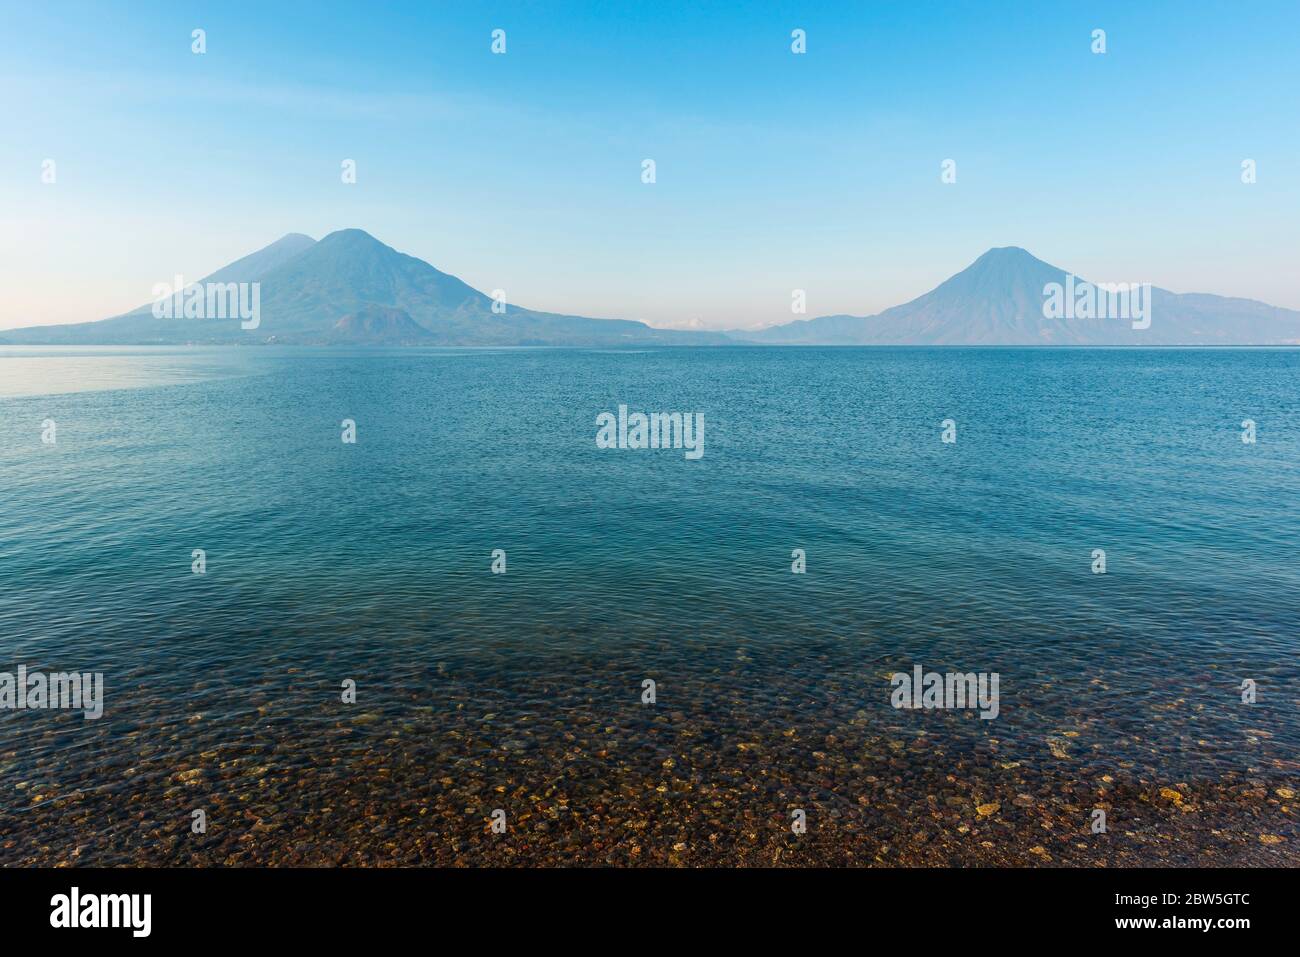 The Atitlan, Toliman and San Pedro Volcano at sunrise by the shore of the Atitlan Lake, Panajachel, Guatemala. Stock Photo